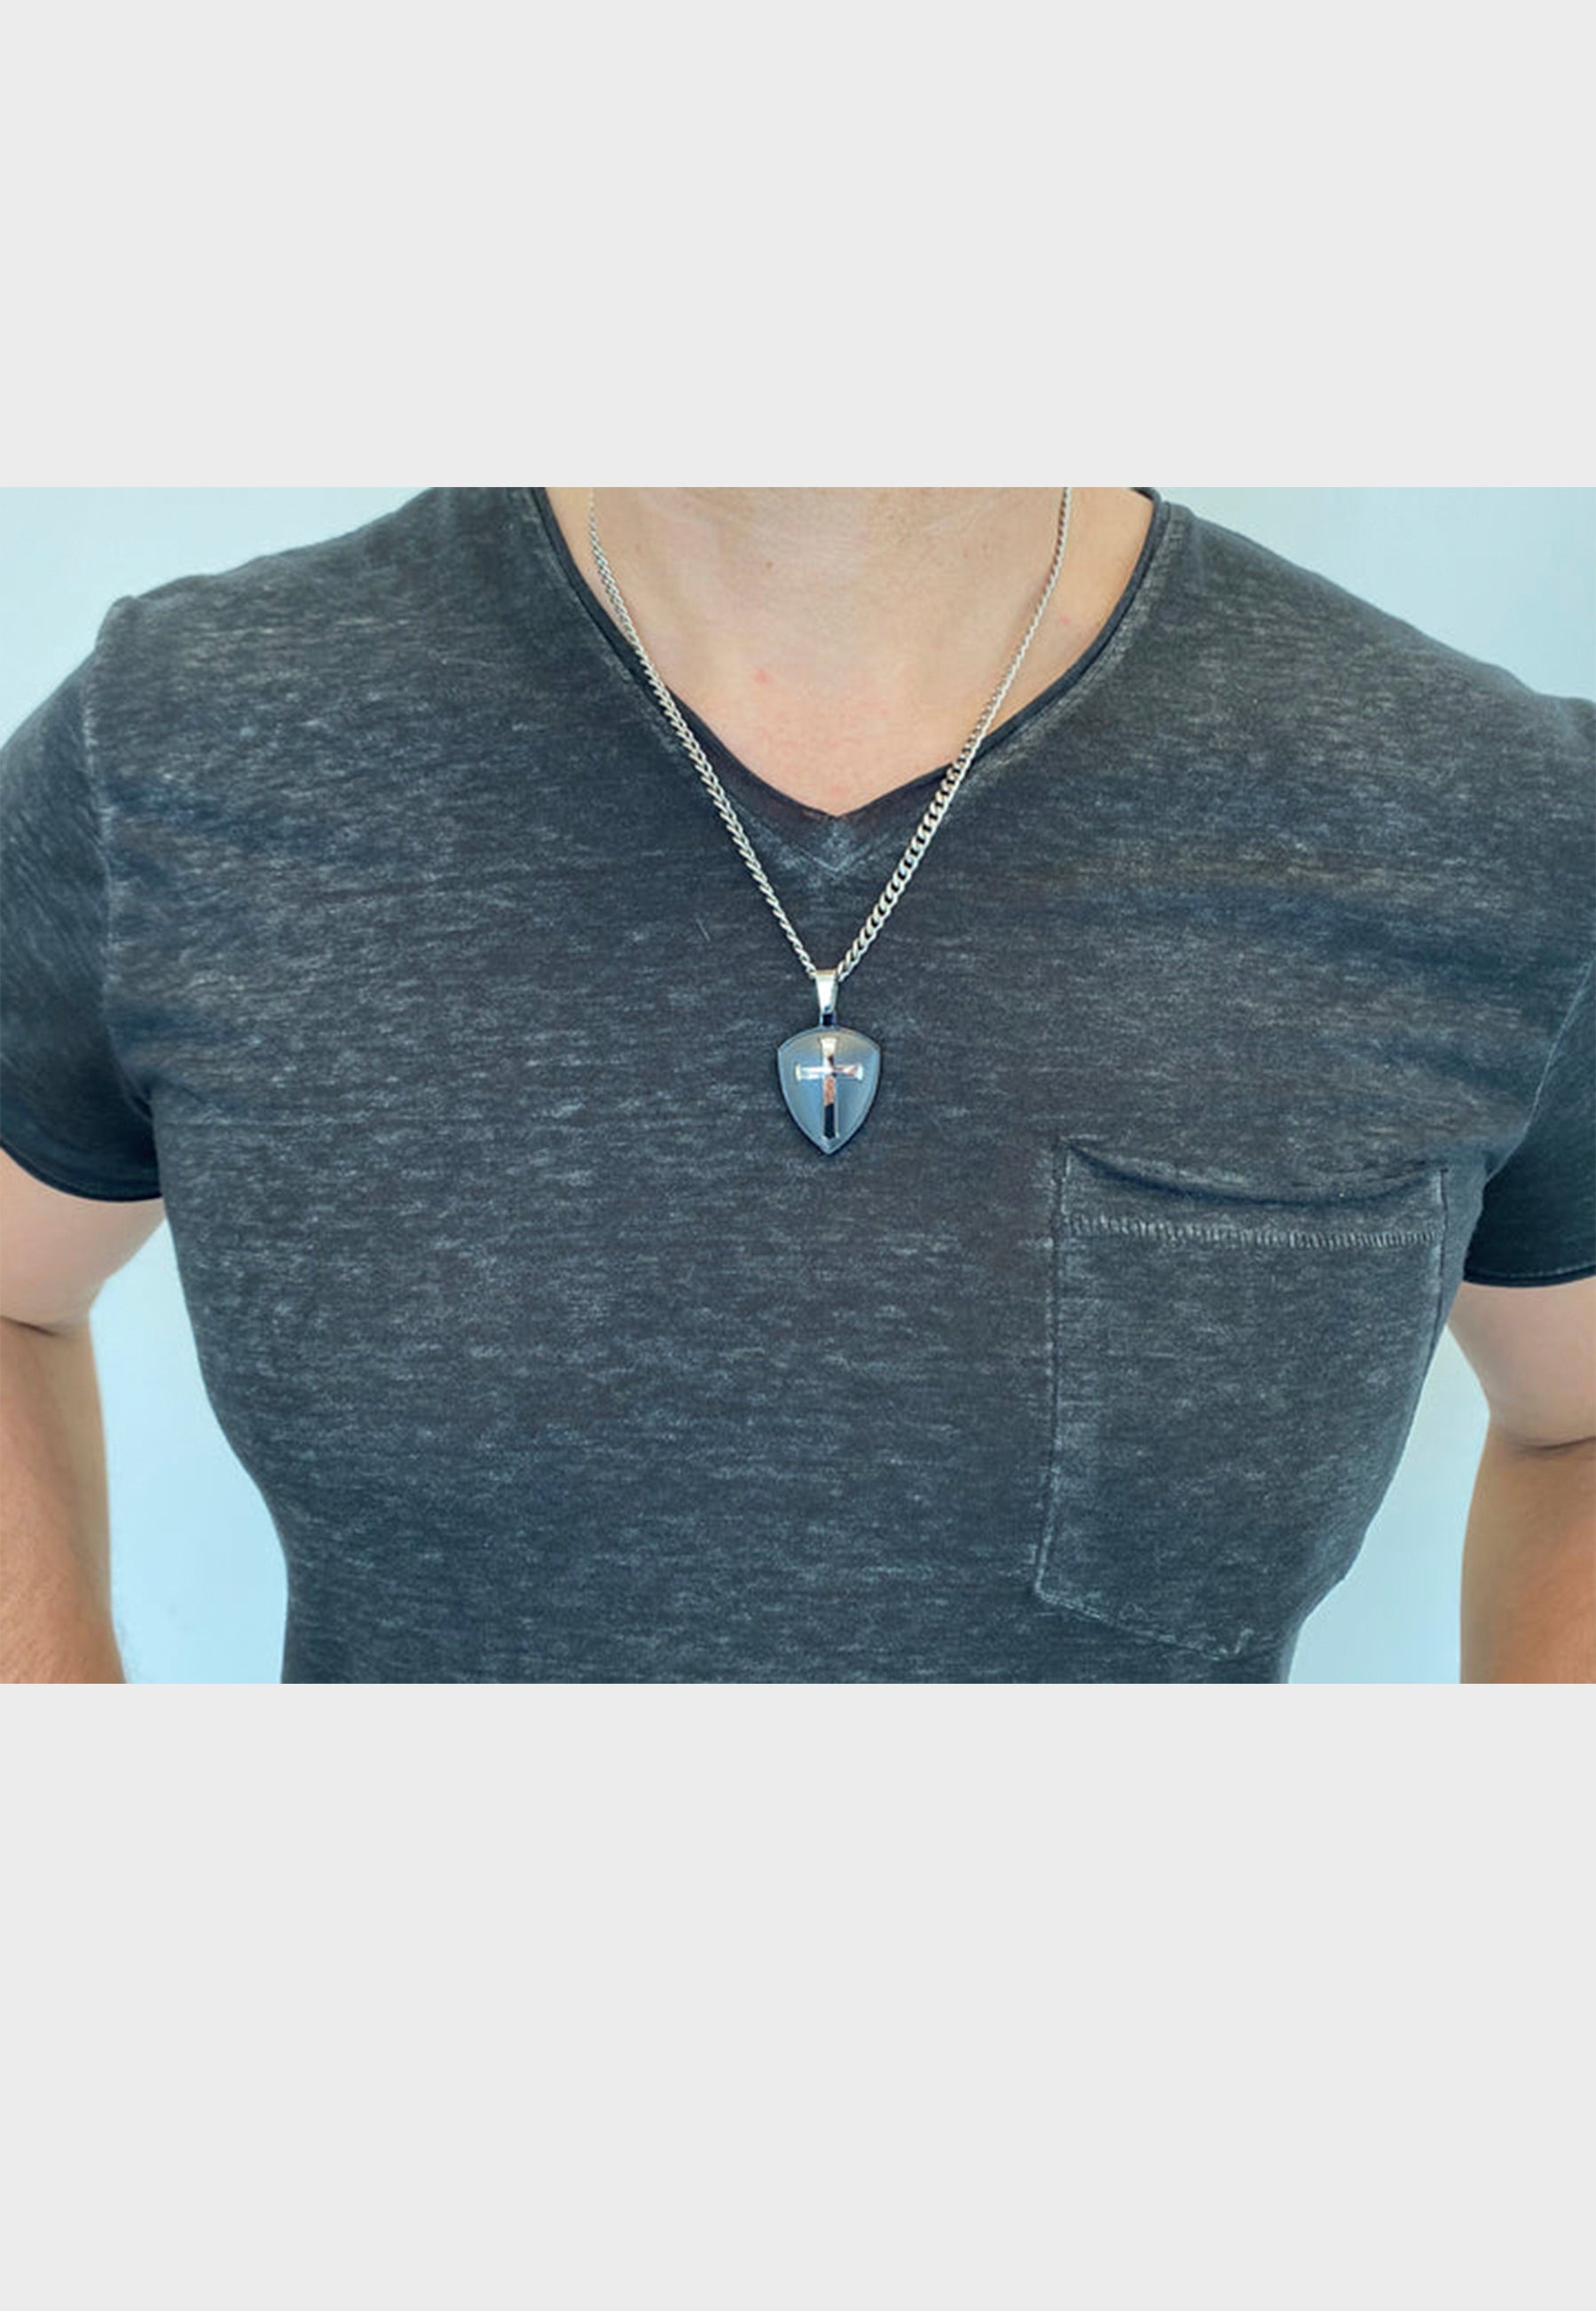 Christian model wearing Ephesians 6:11 pendant necklace